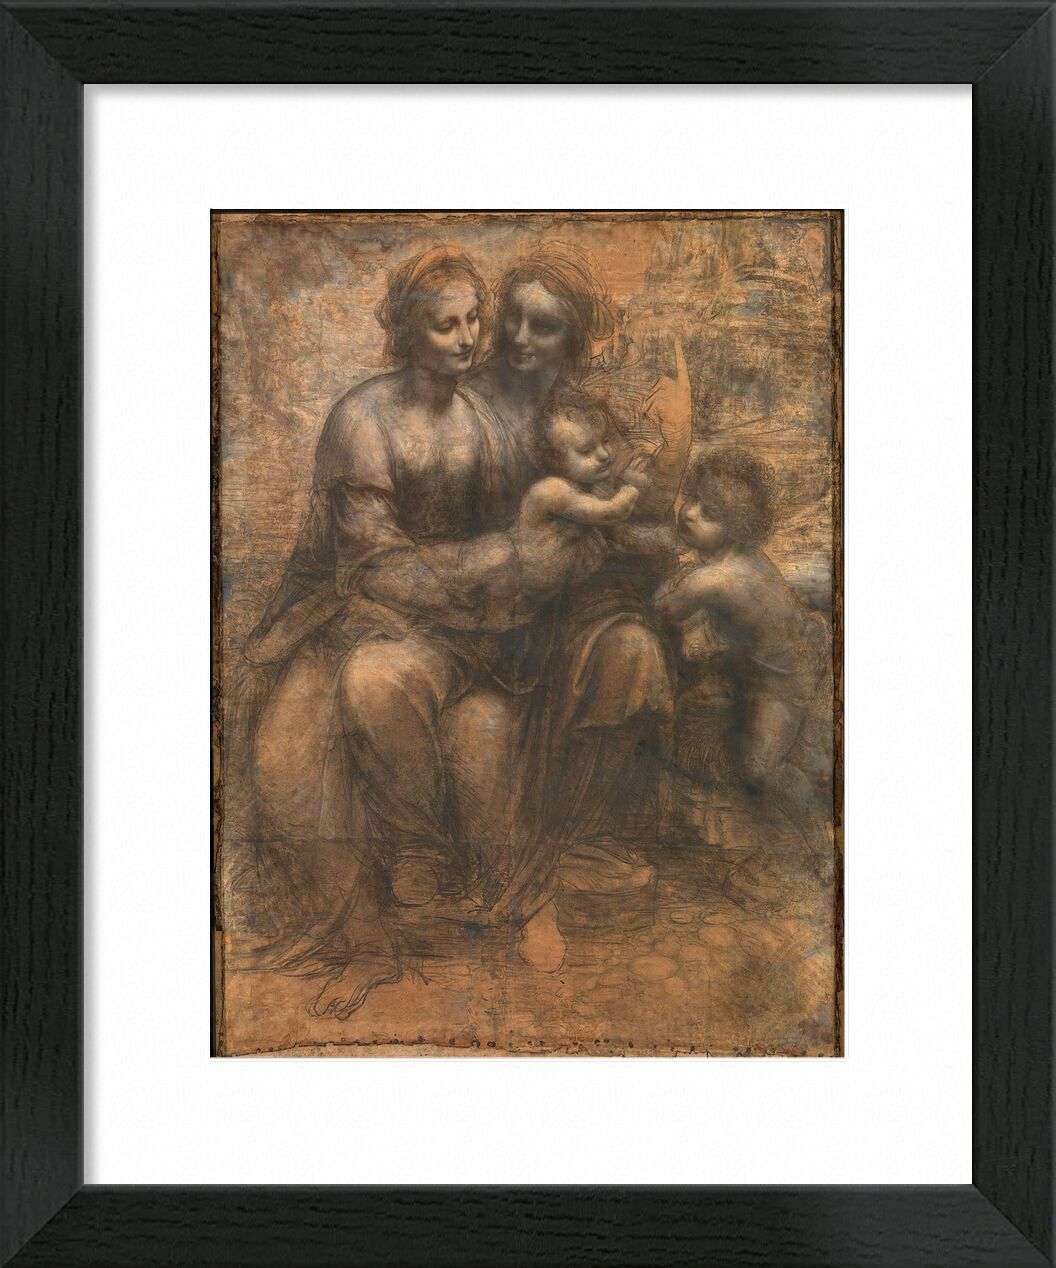 The Virgin and Child with Saint Anne and Saint John the Baptist - Leonardo da Vinci desde Bellas artes, Prodi Art, Sain Jean, bosquejo, Jesús, lápiz, dibujo, Leonardo da Vinci